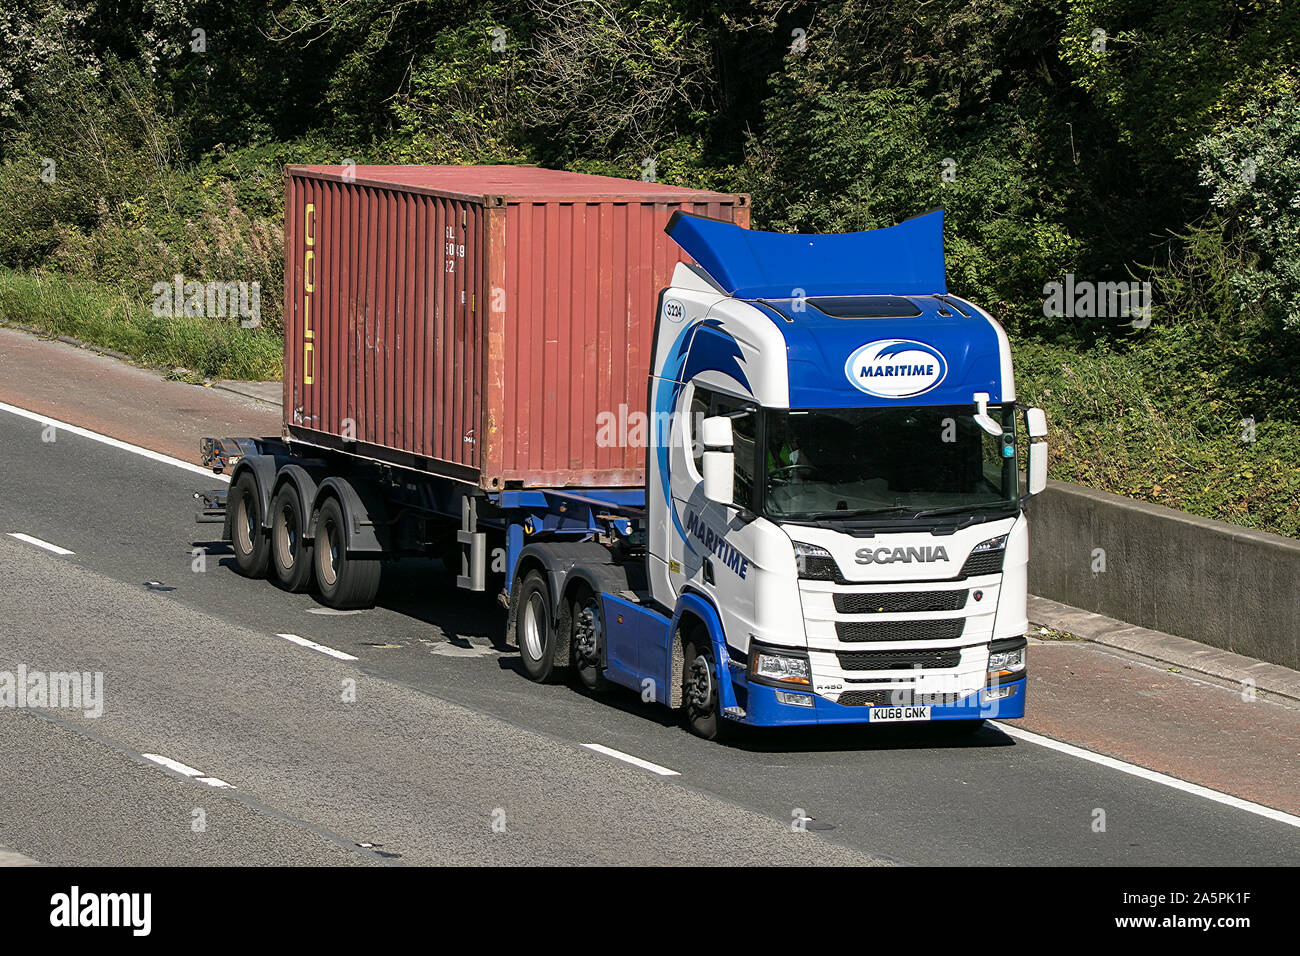 Transporte marítimo distribución scania viajando por la autopista M61 cerca de Manchester, Reino Unido Foto de stock